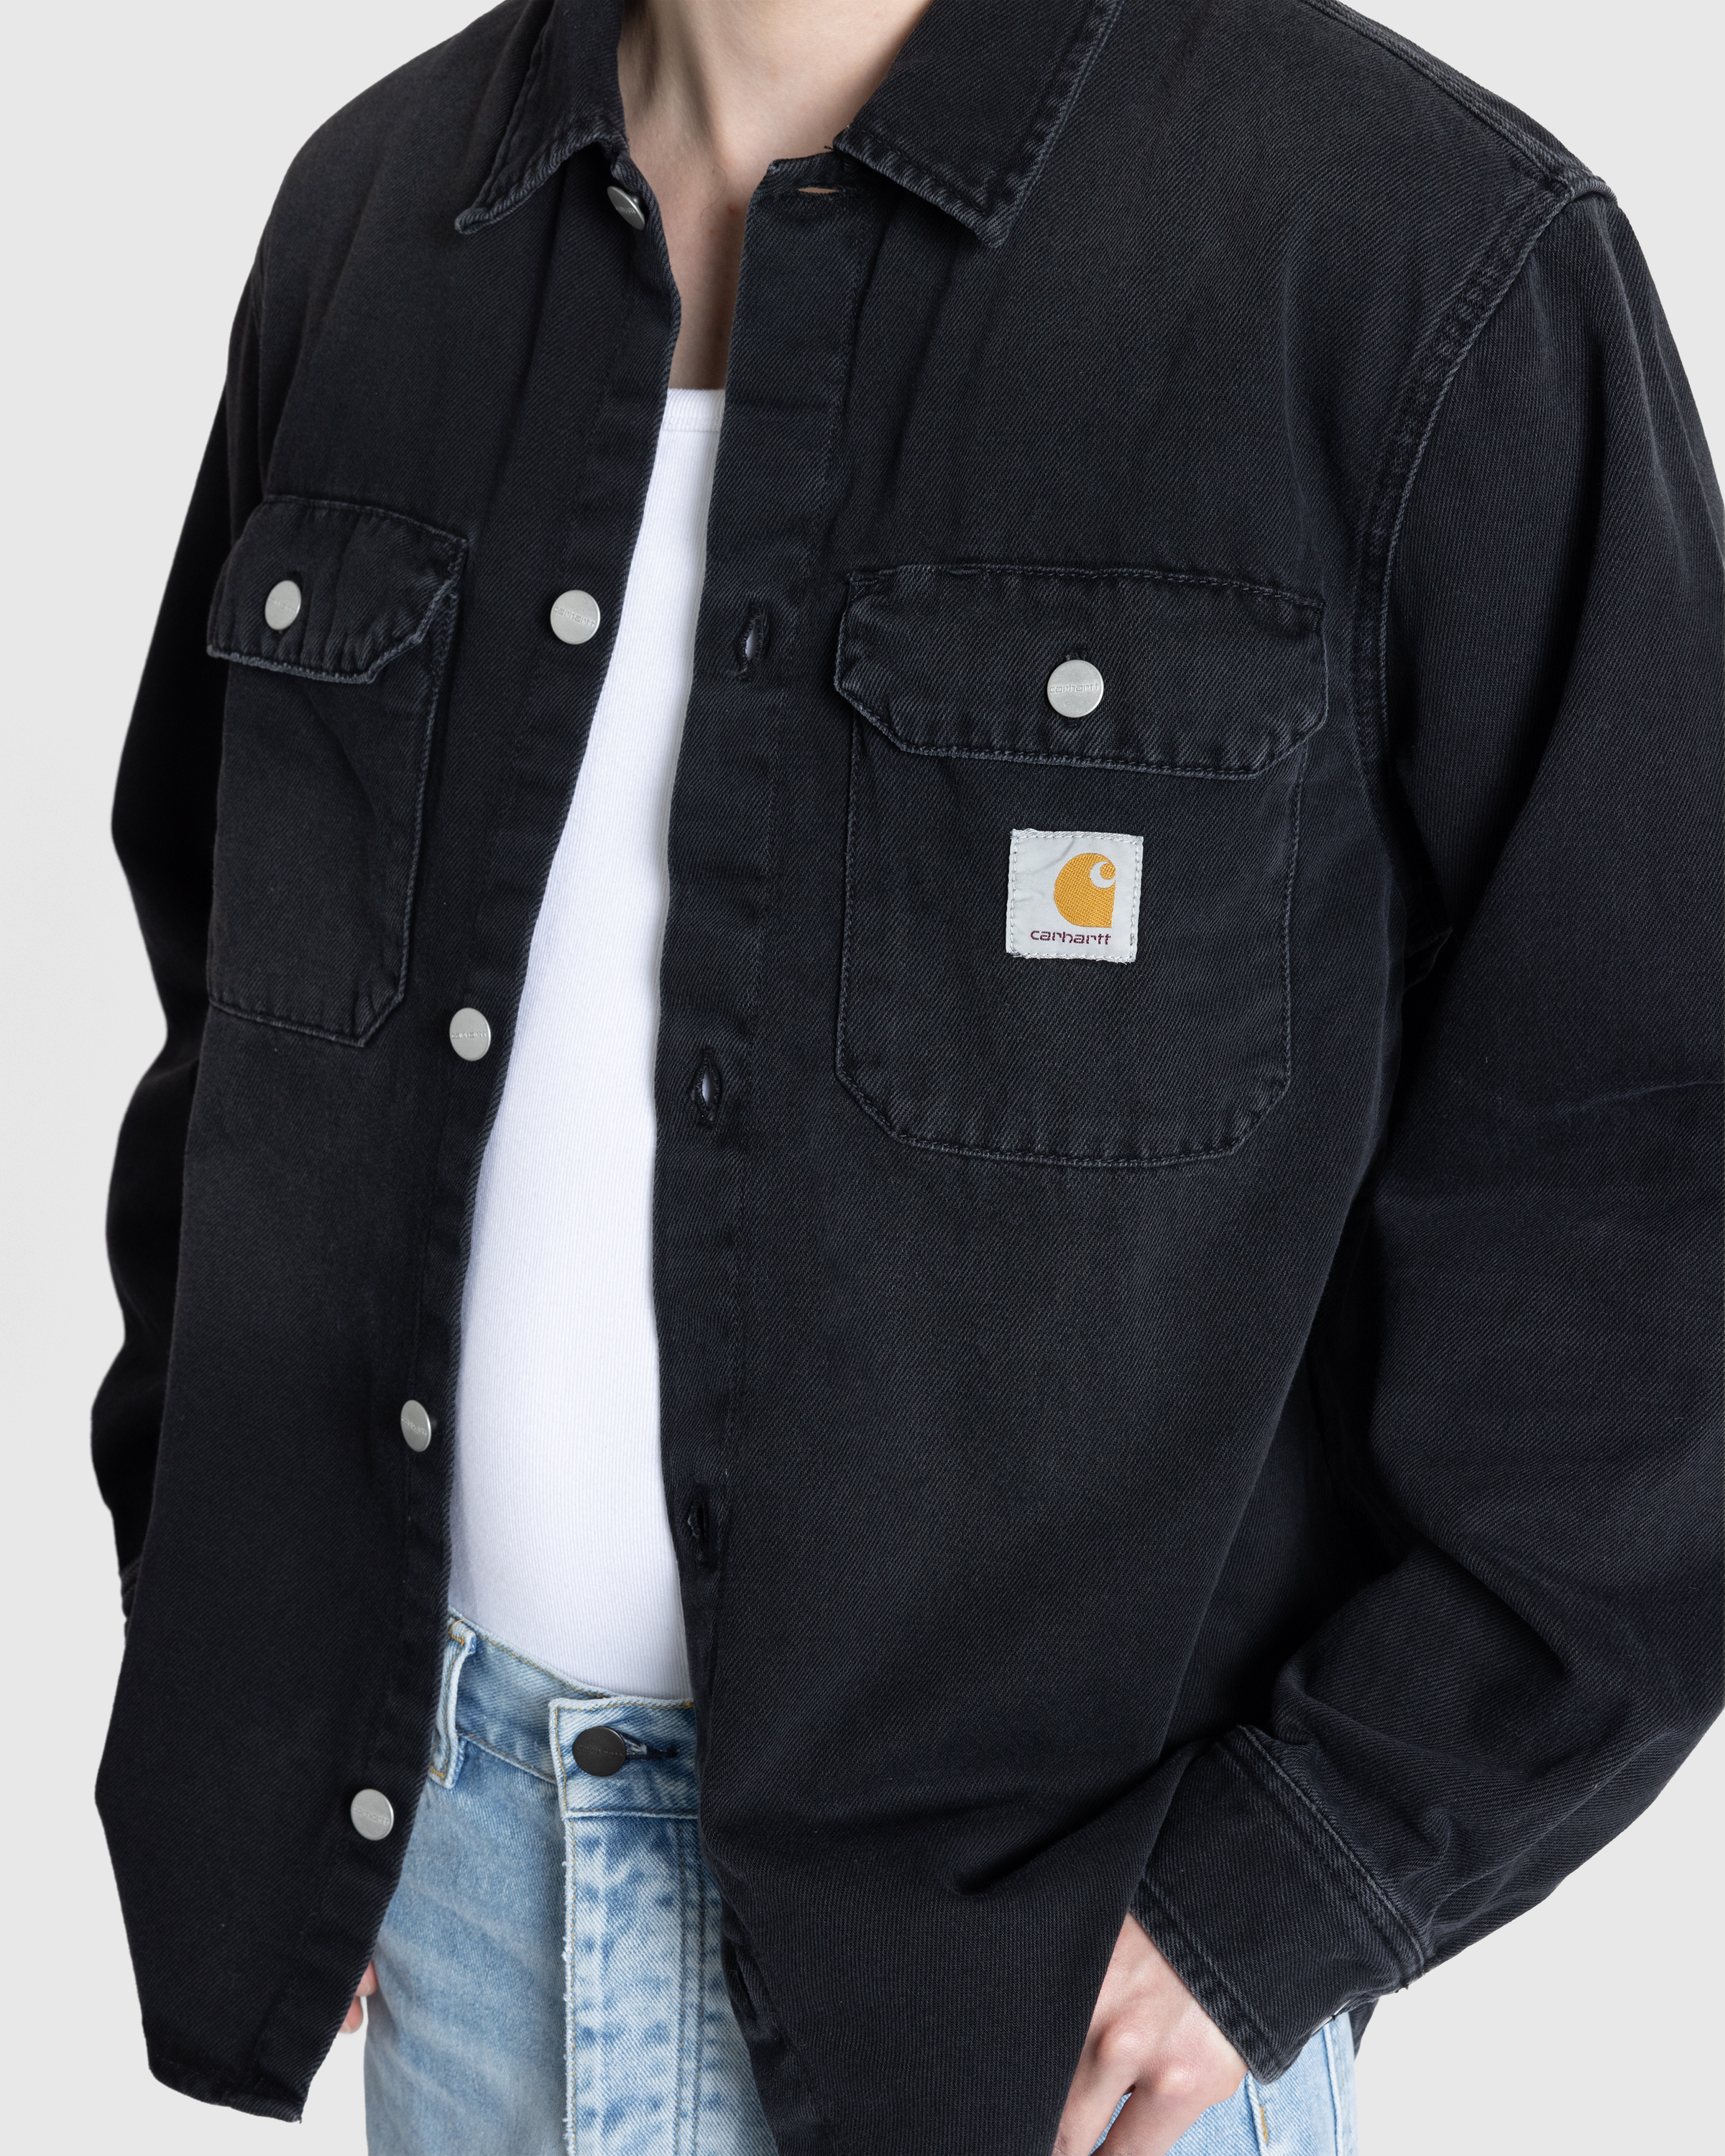 Carhartt WIP – Harvey Shirt Jacket Black/Dark Used Wash - Shirts - Black - Image 5